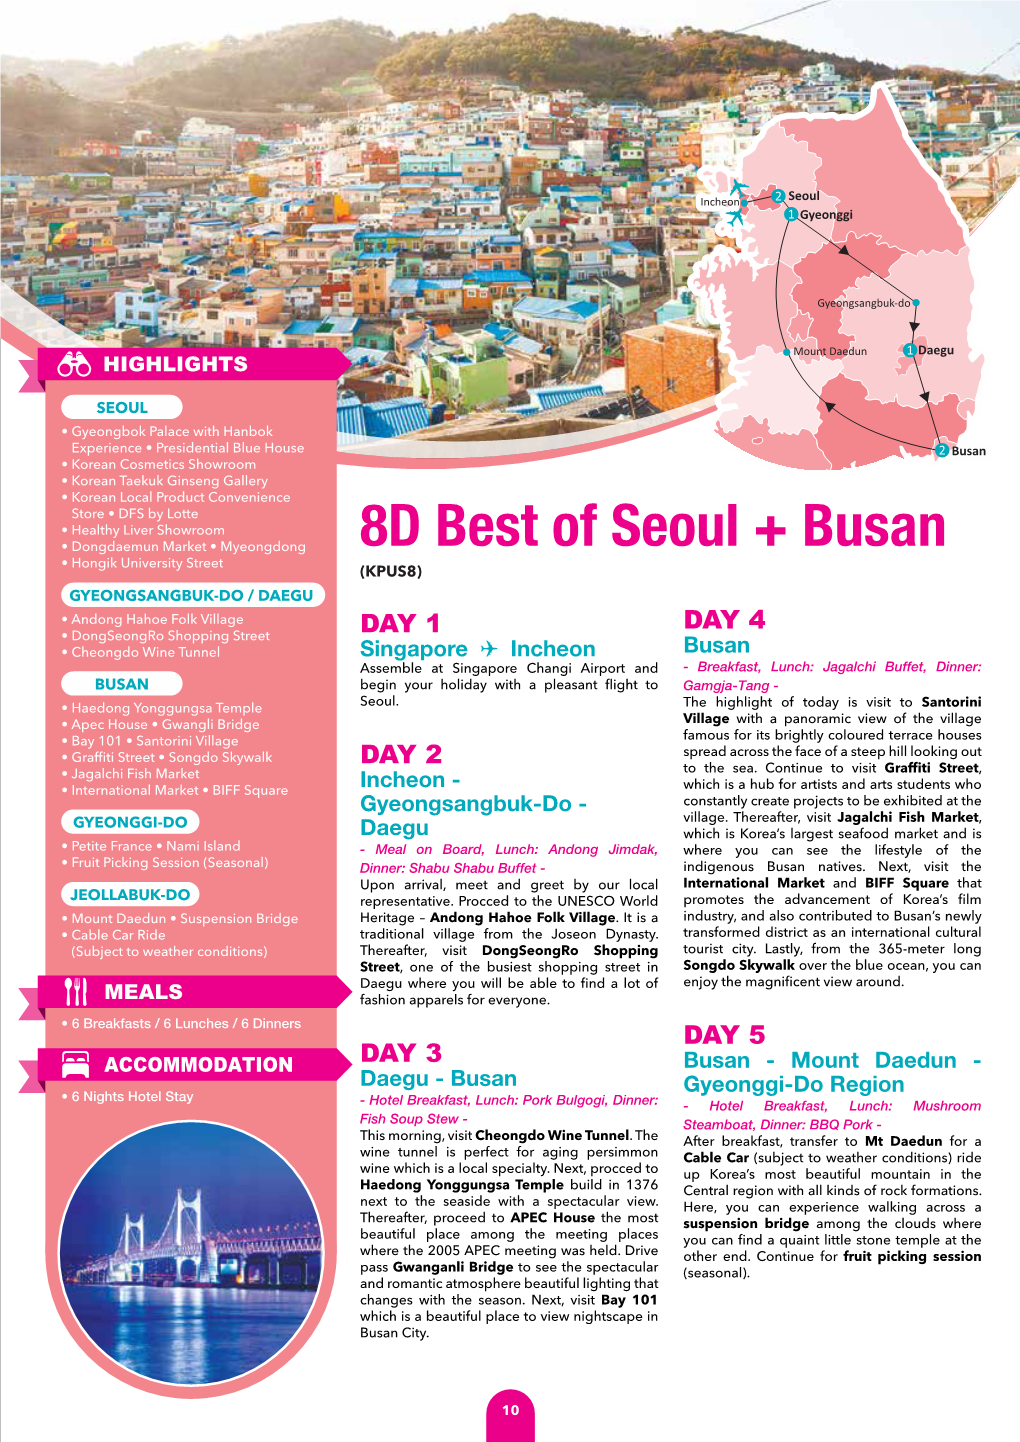 8D Best of Seoul + Busan